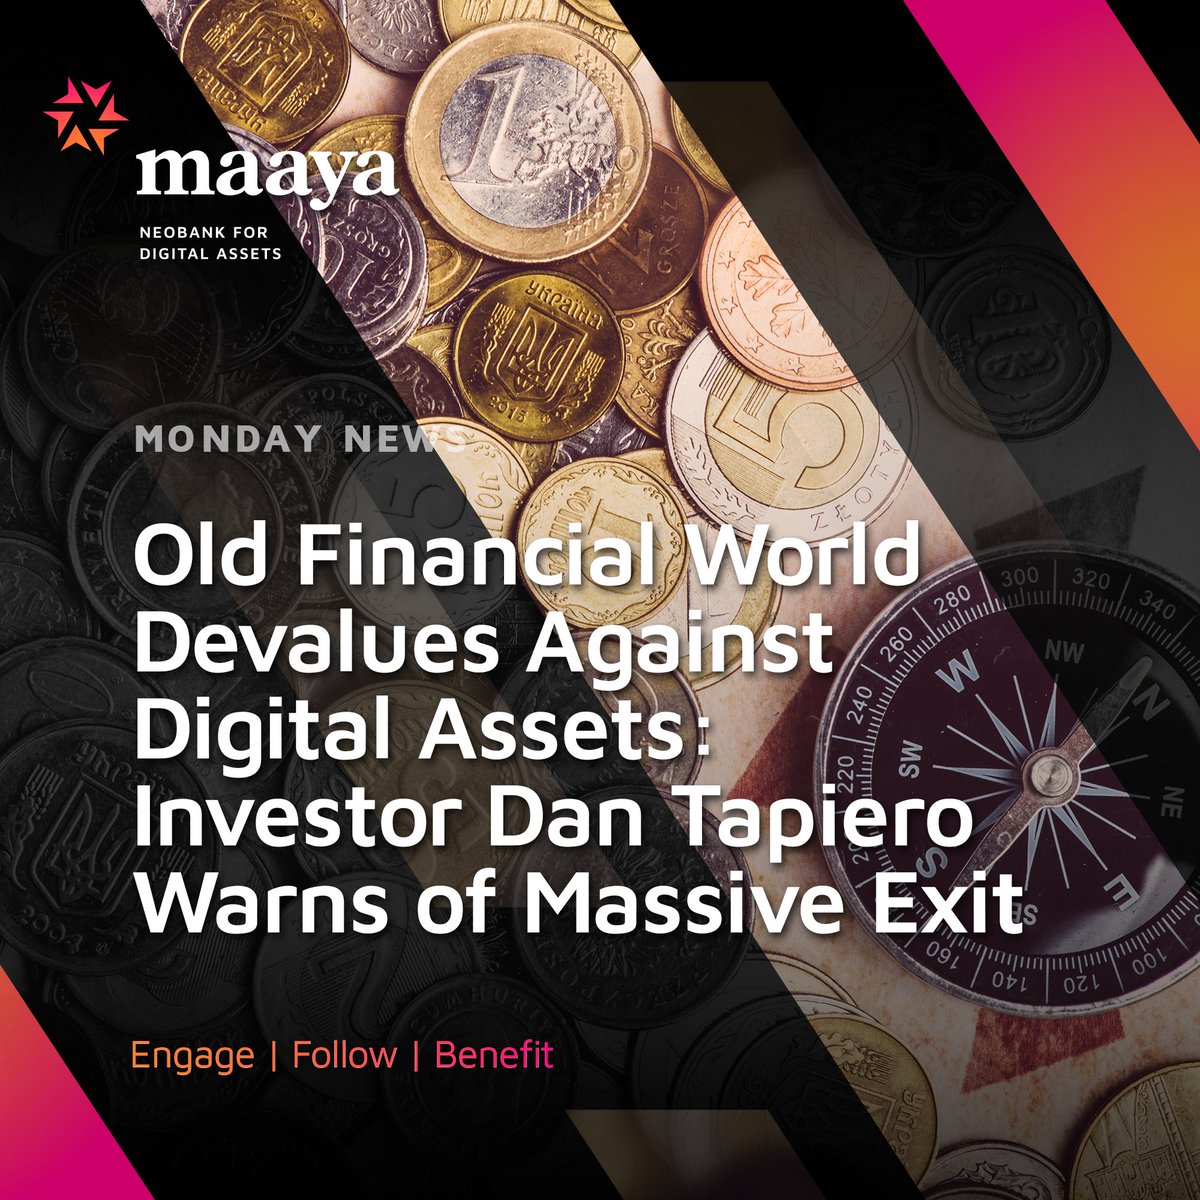 Digital Assets Gain Momentum: Investor Dan Tapiero Warns of Historic Shift as Traditional Finance Faces Massive Exodus.

#DigiMaaya #FinancialShift #DigitalAssets #DanTapeiro #Investments